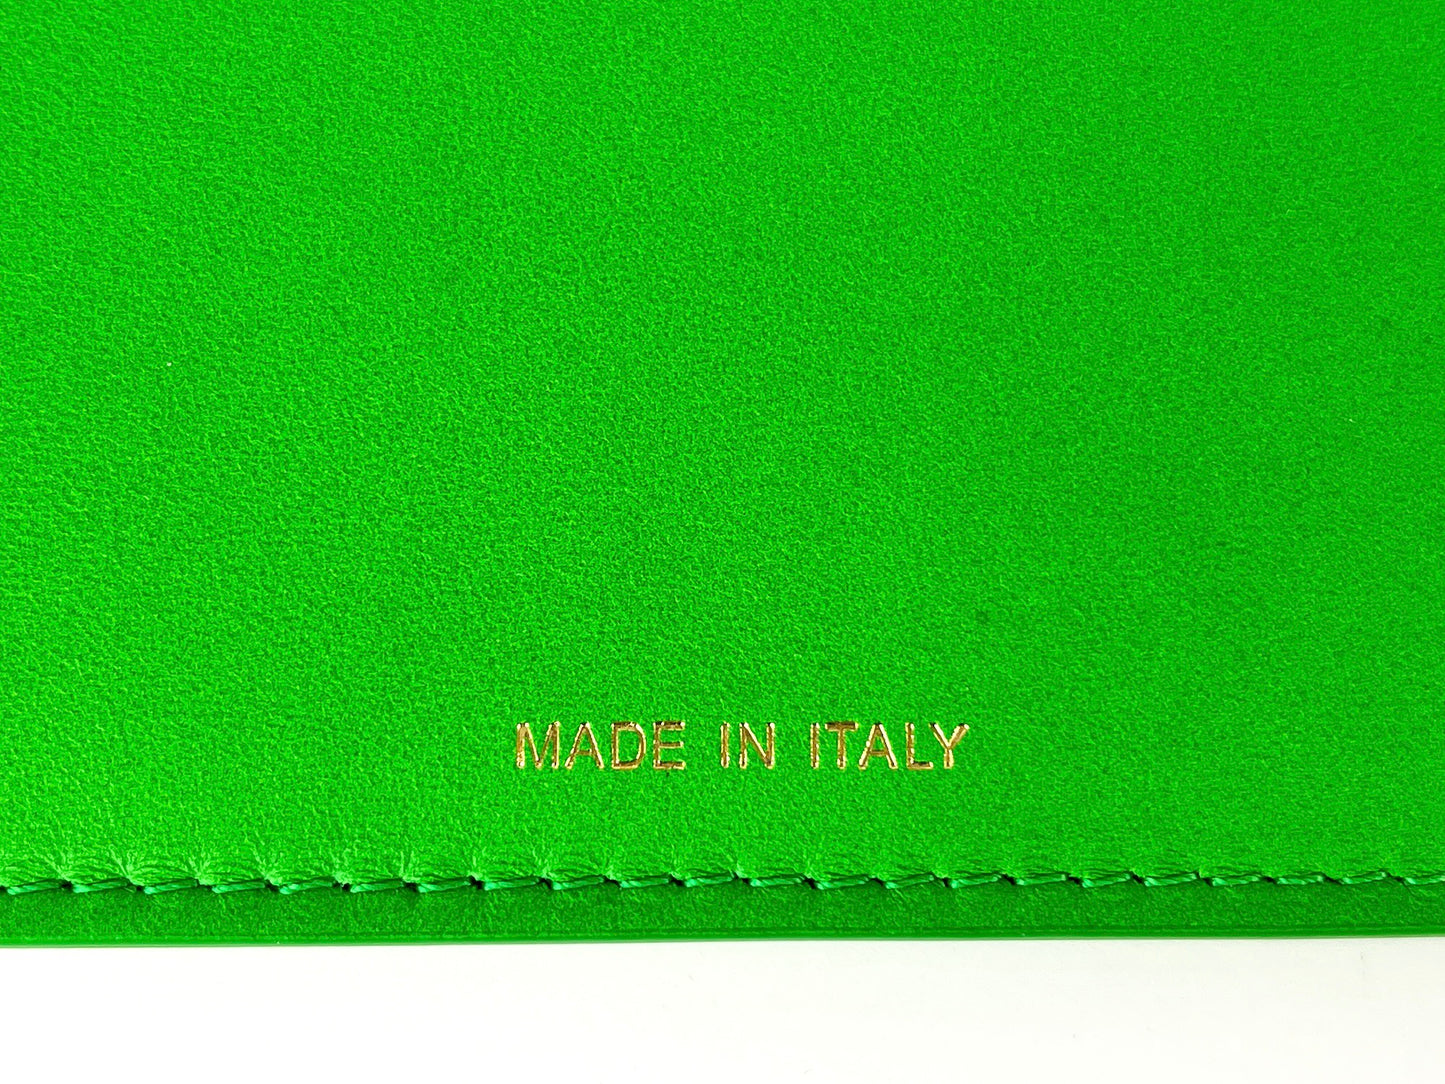 New FENDI Green Peekaboo Nappa Leather Tomatillo Pocket